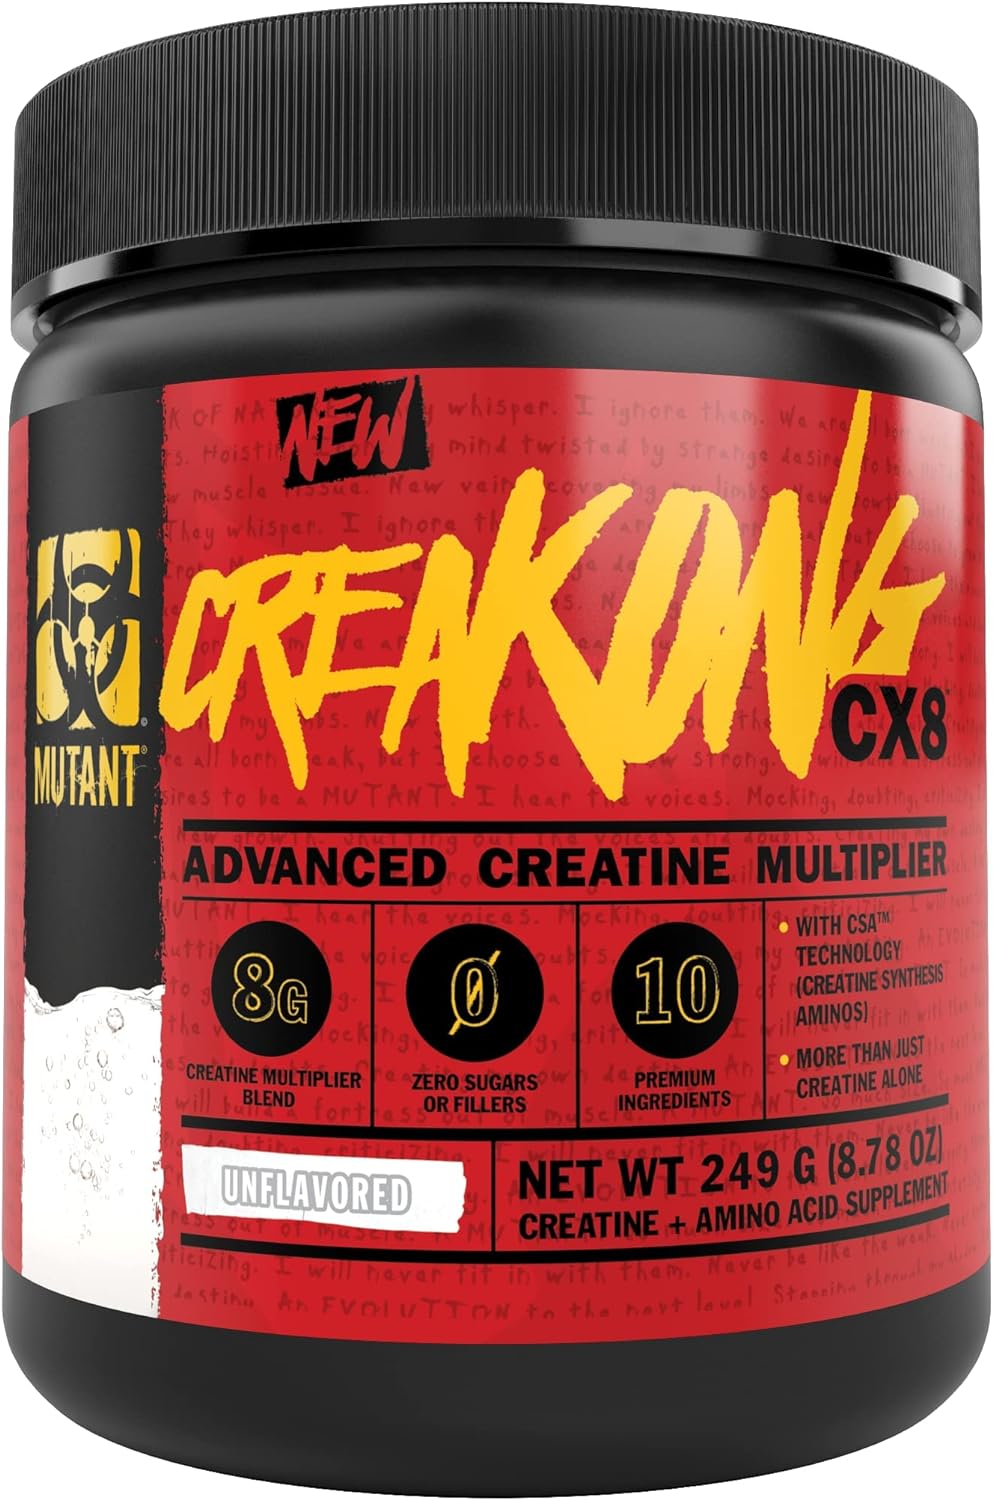 Mutant CREAKONG CX8 | Advanced Creatine Multiplier | Creatine + Amino